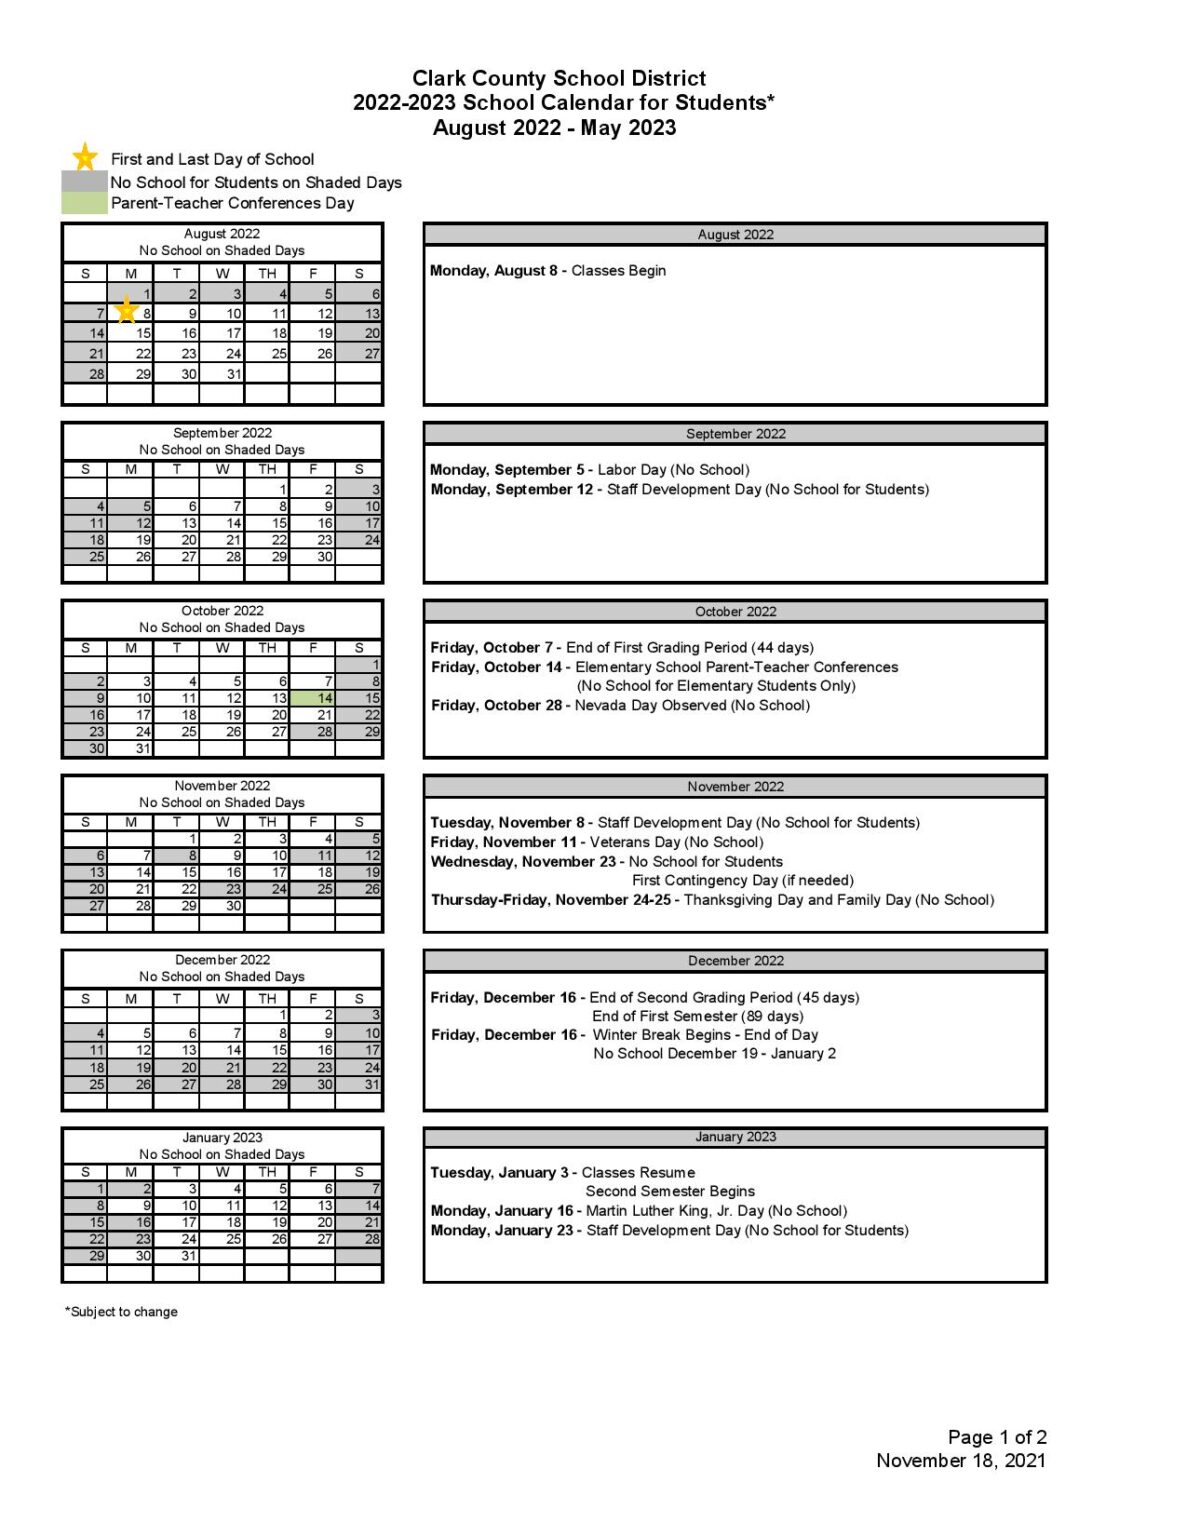 Clark County School District Calendar Holidays 2022-2023 PDF